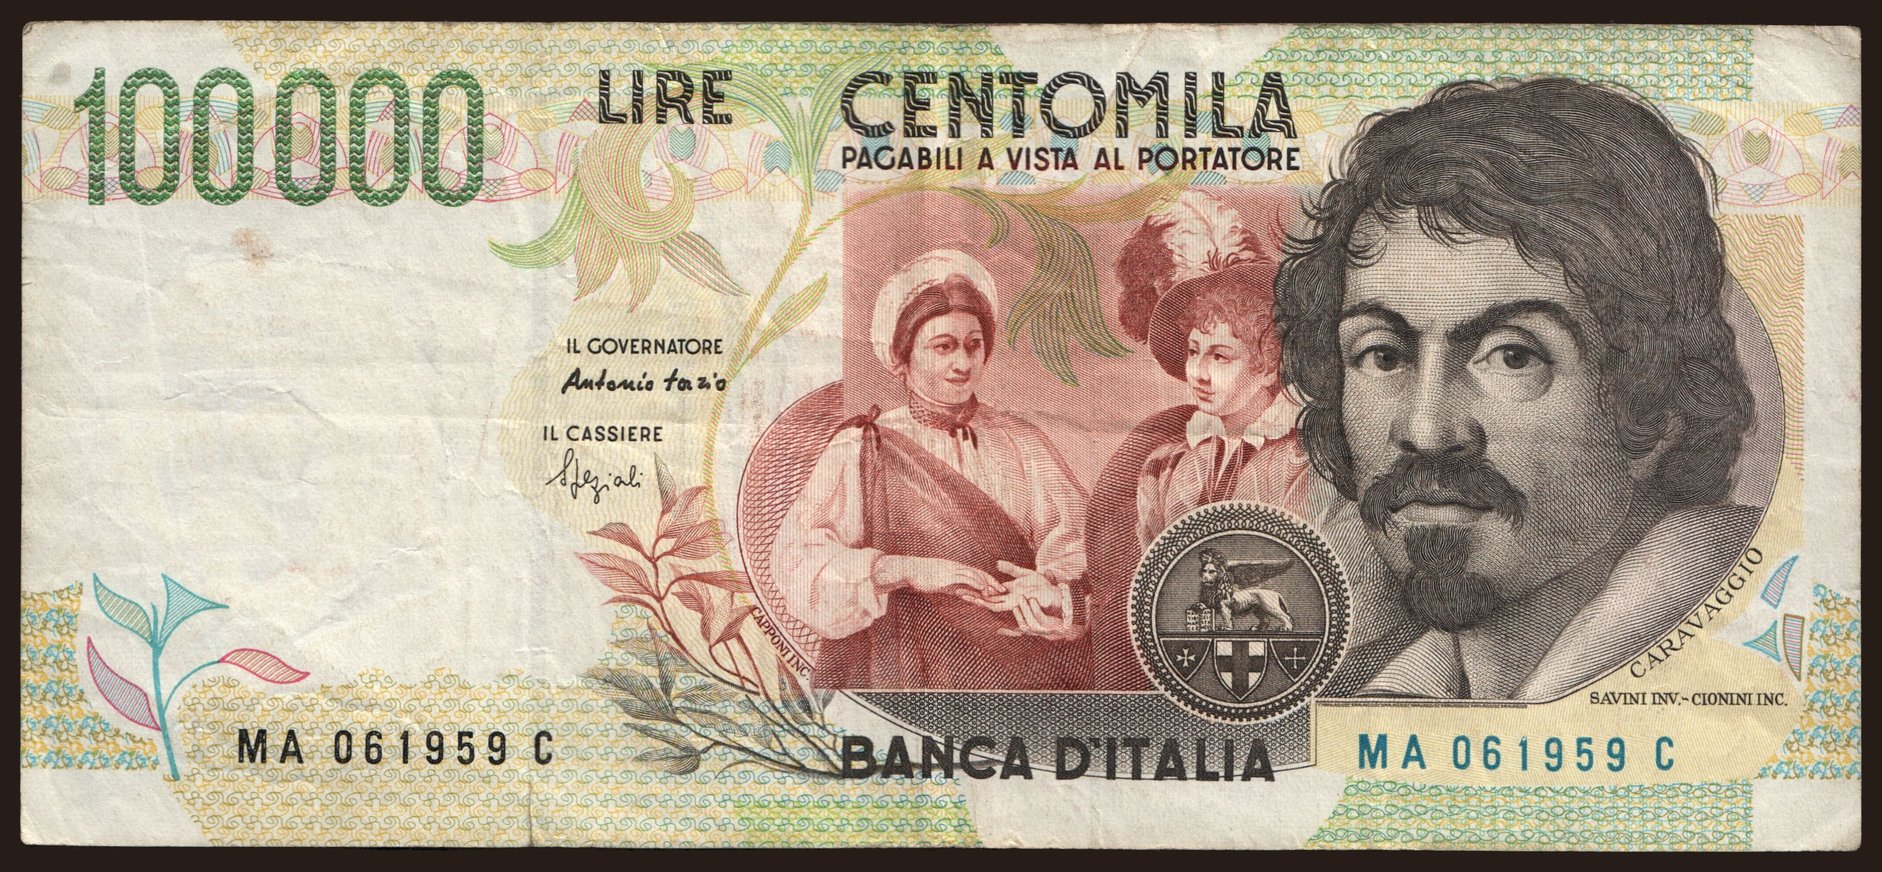 100.000 lire, 1994